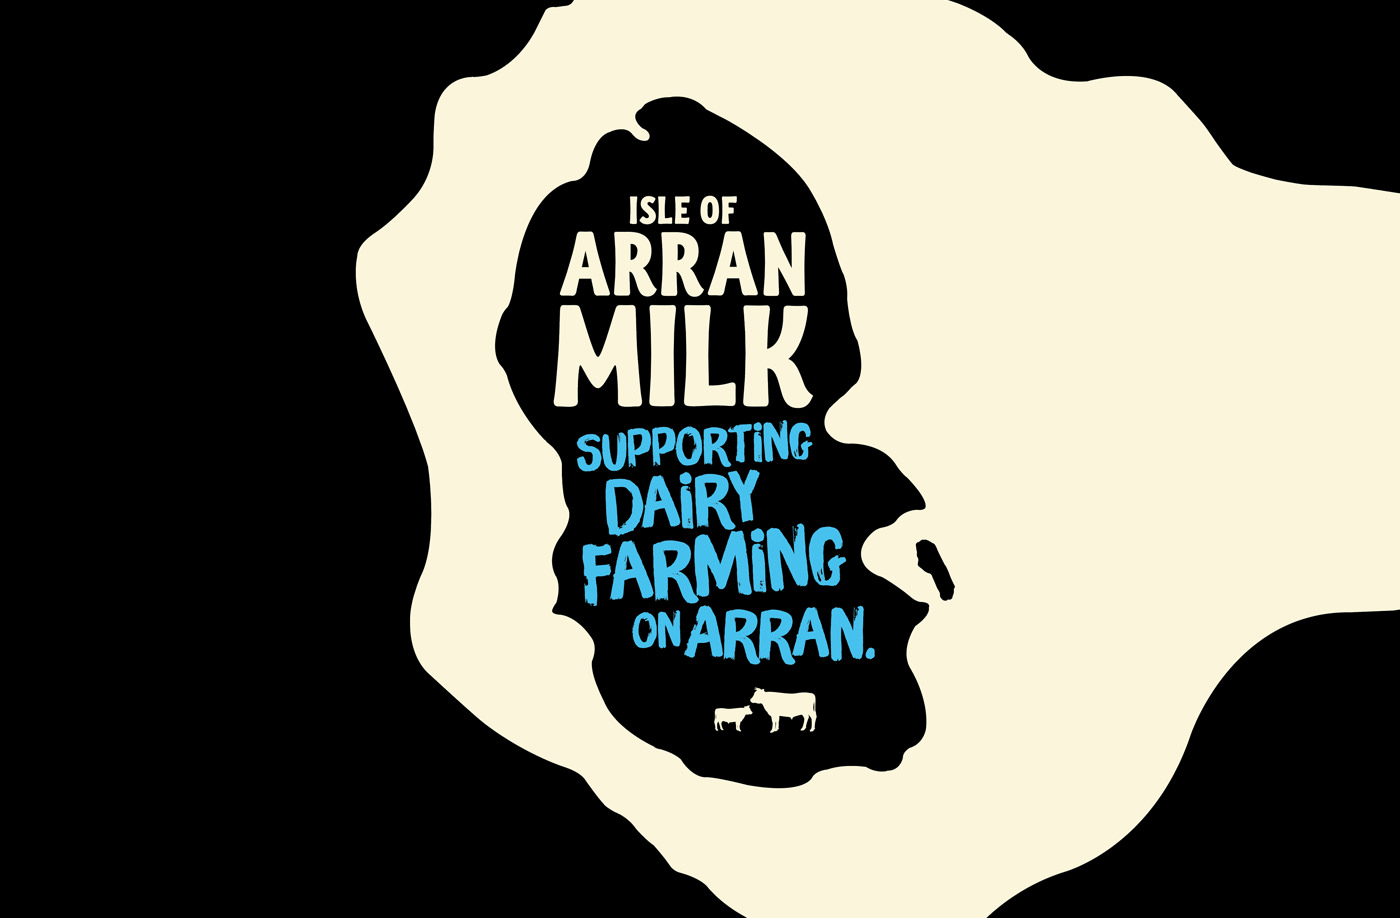 Arran Milk 'supporting dairy farming on Arran' messaging